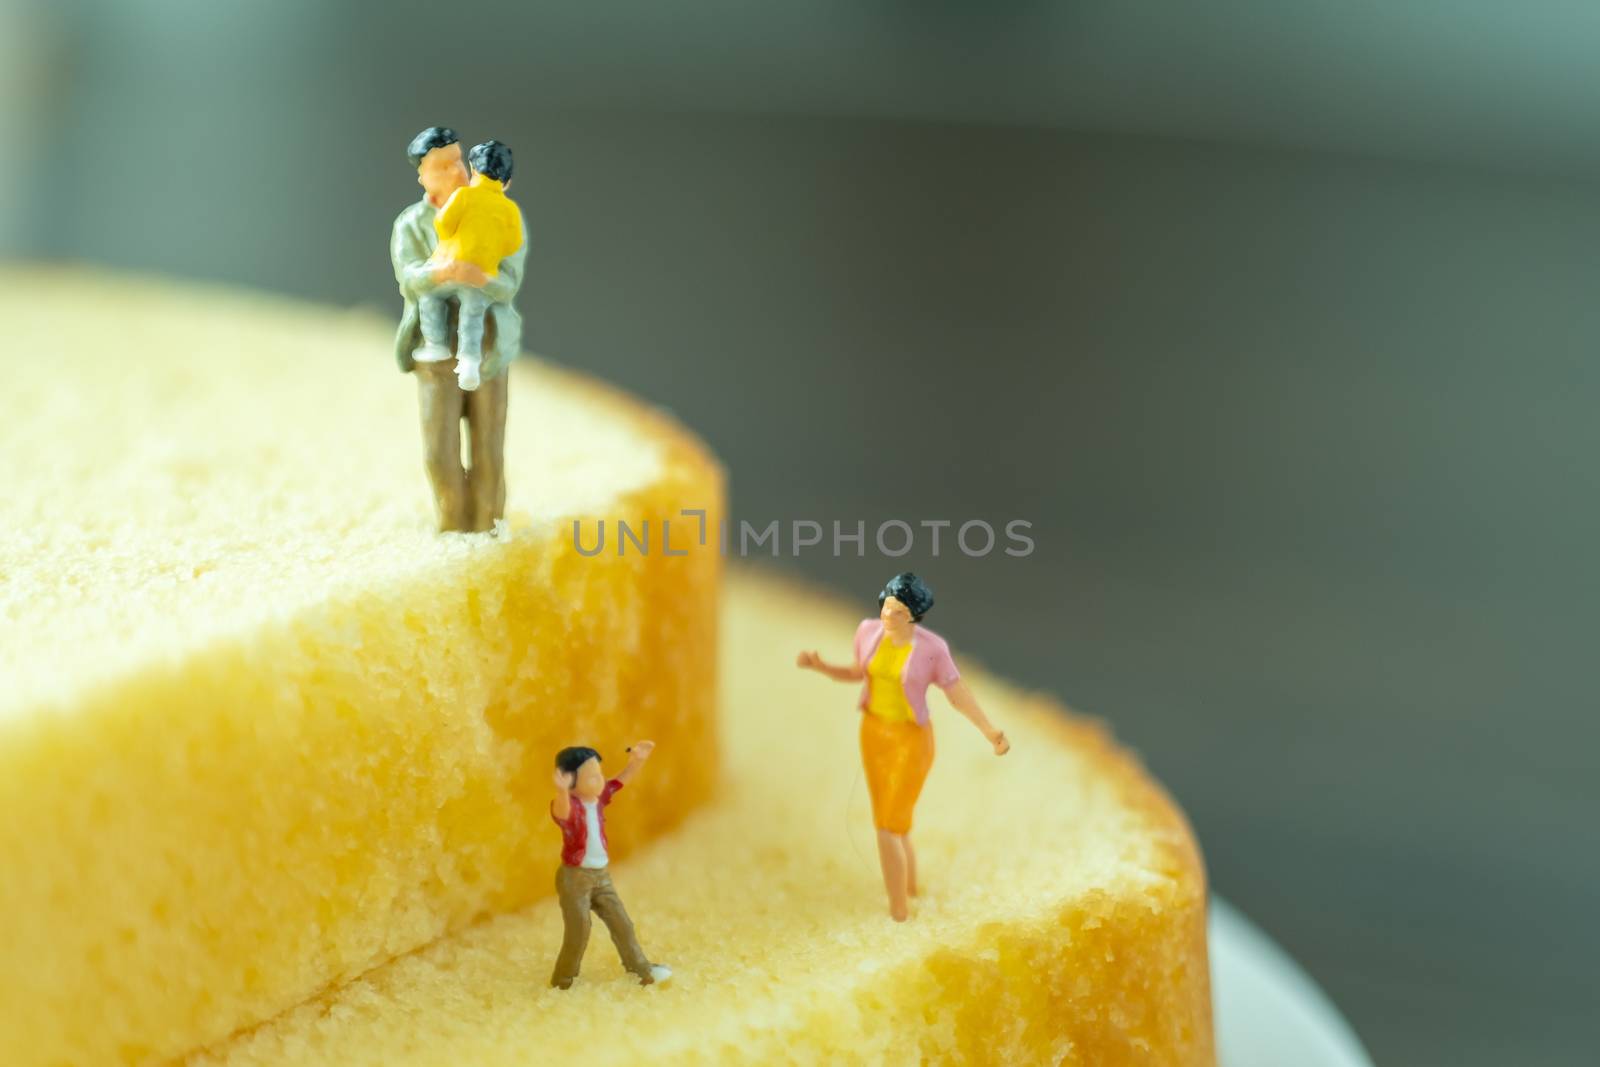 miniature of family model on butter cake by Toefotostock